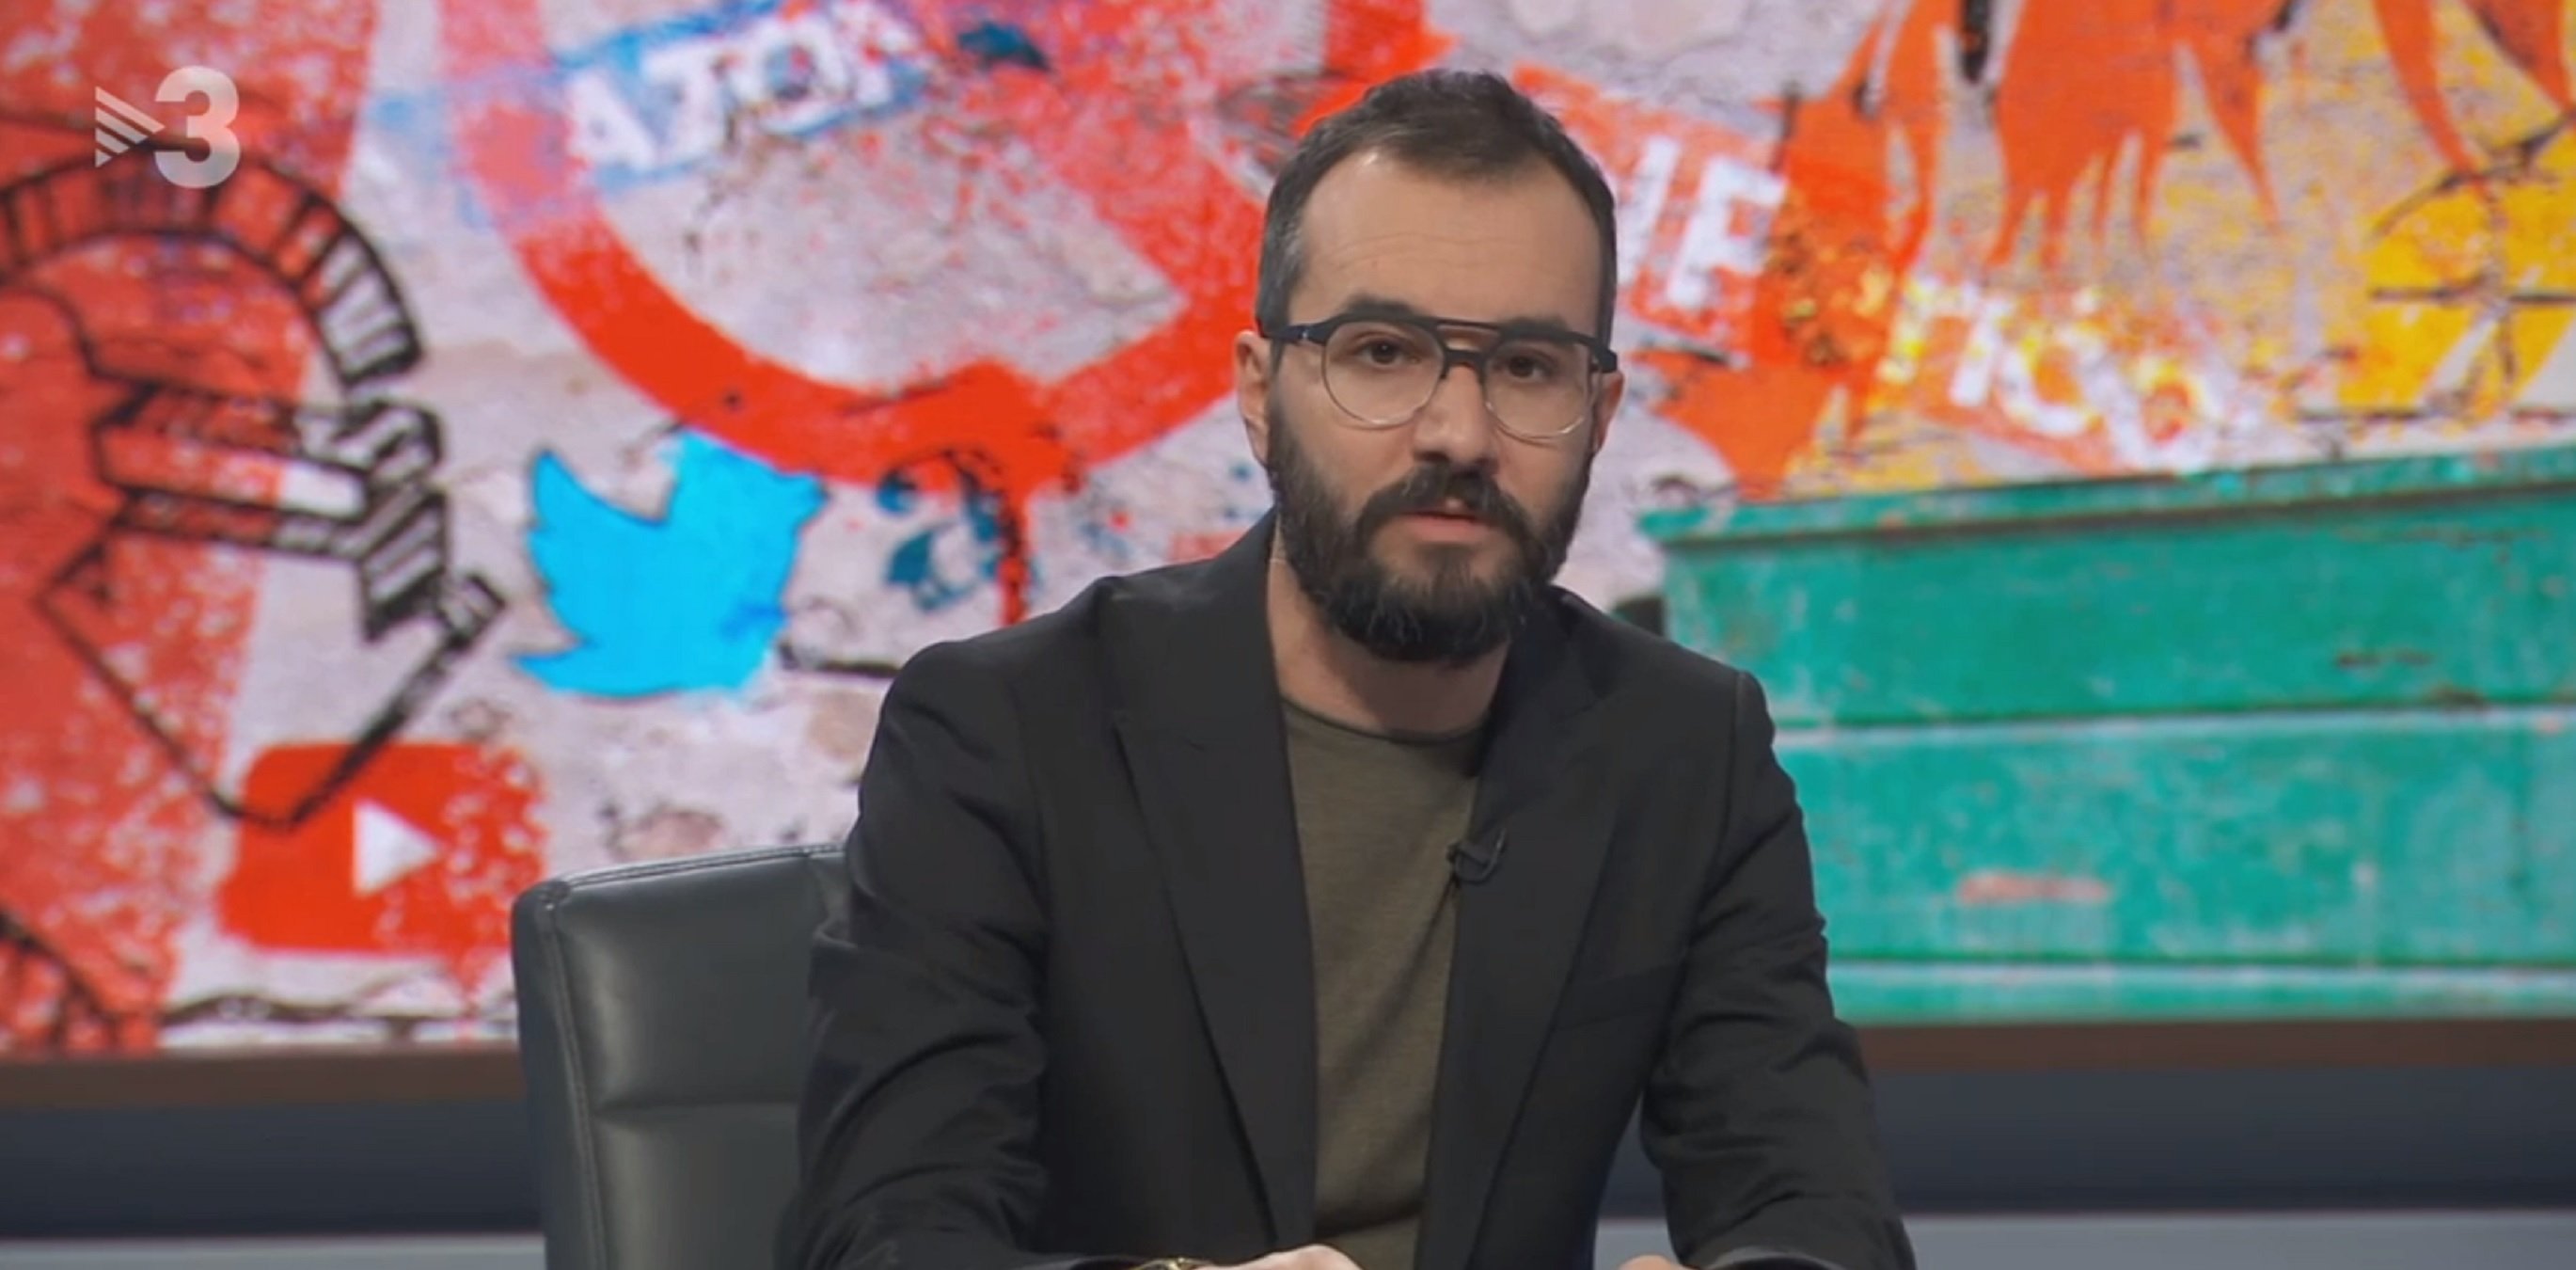 Un insulto de Jair Domínguez a Cayetana mueve al director de TV3 a hacer cambios